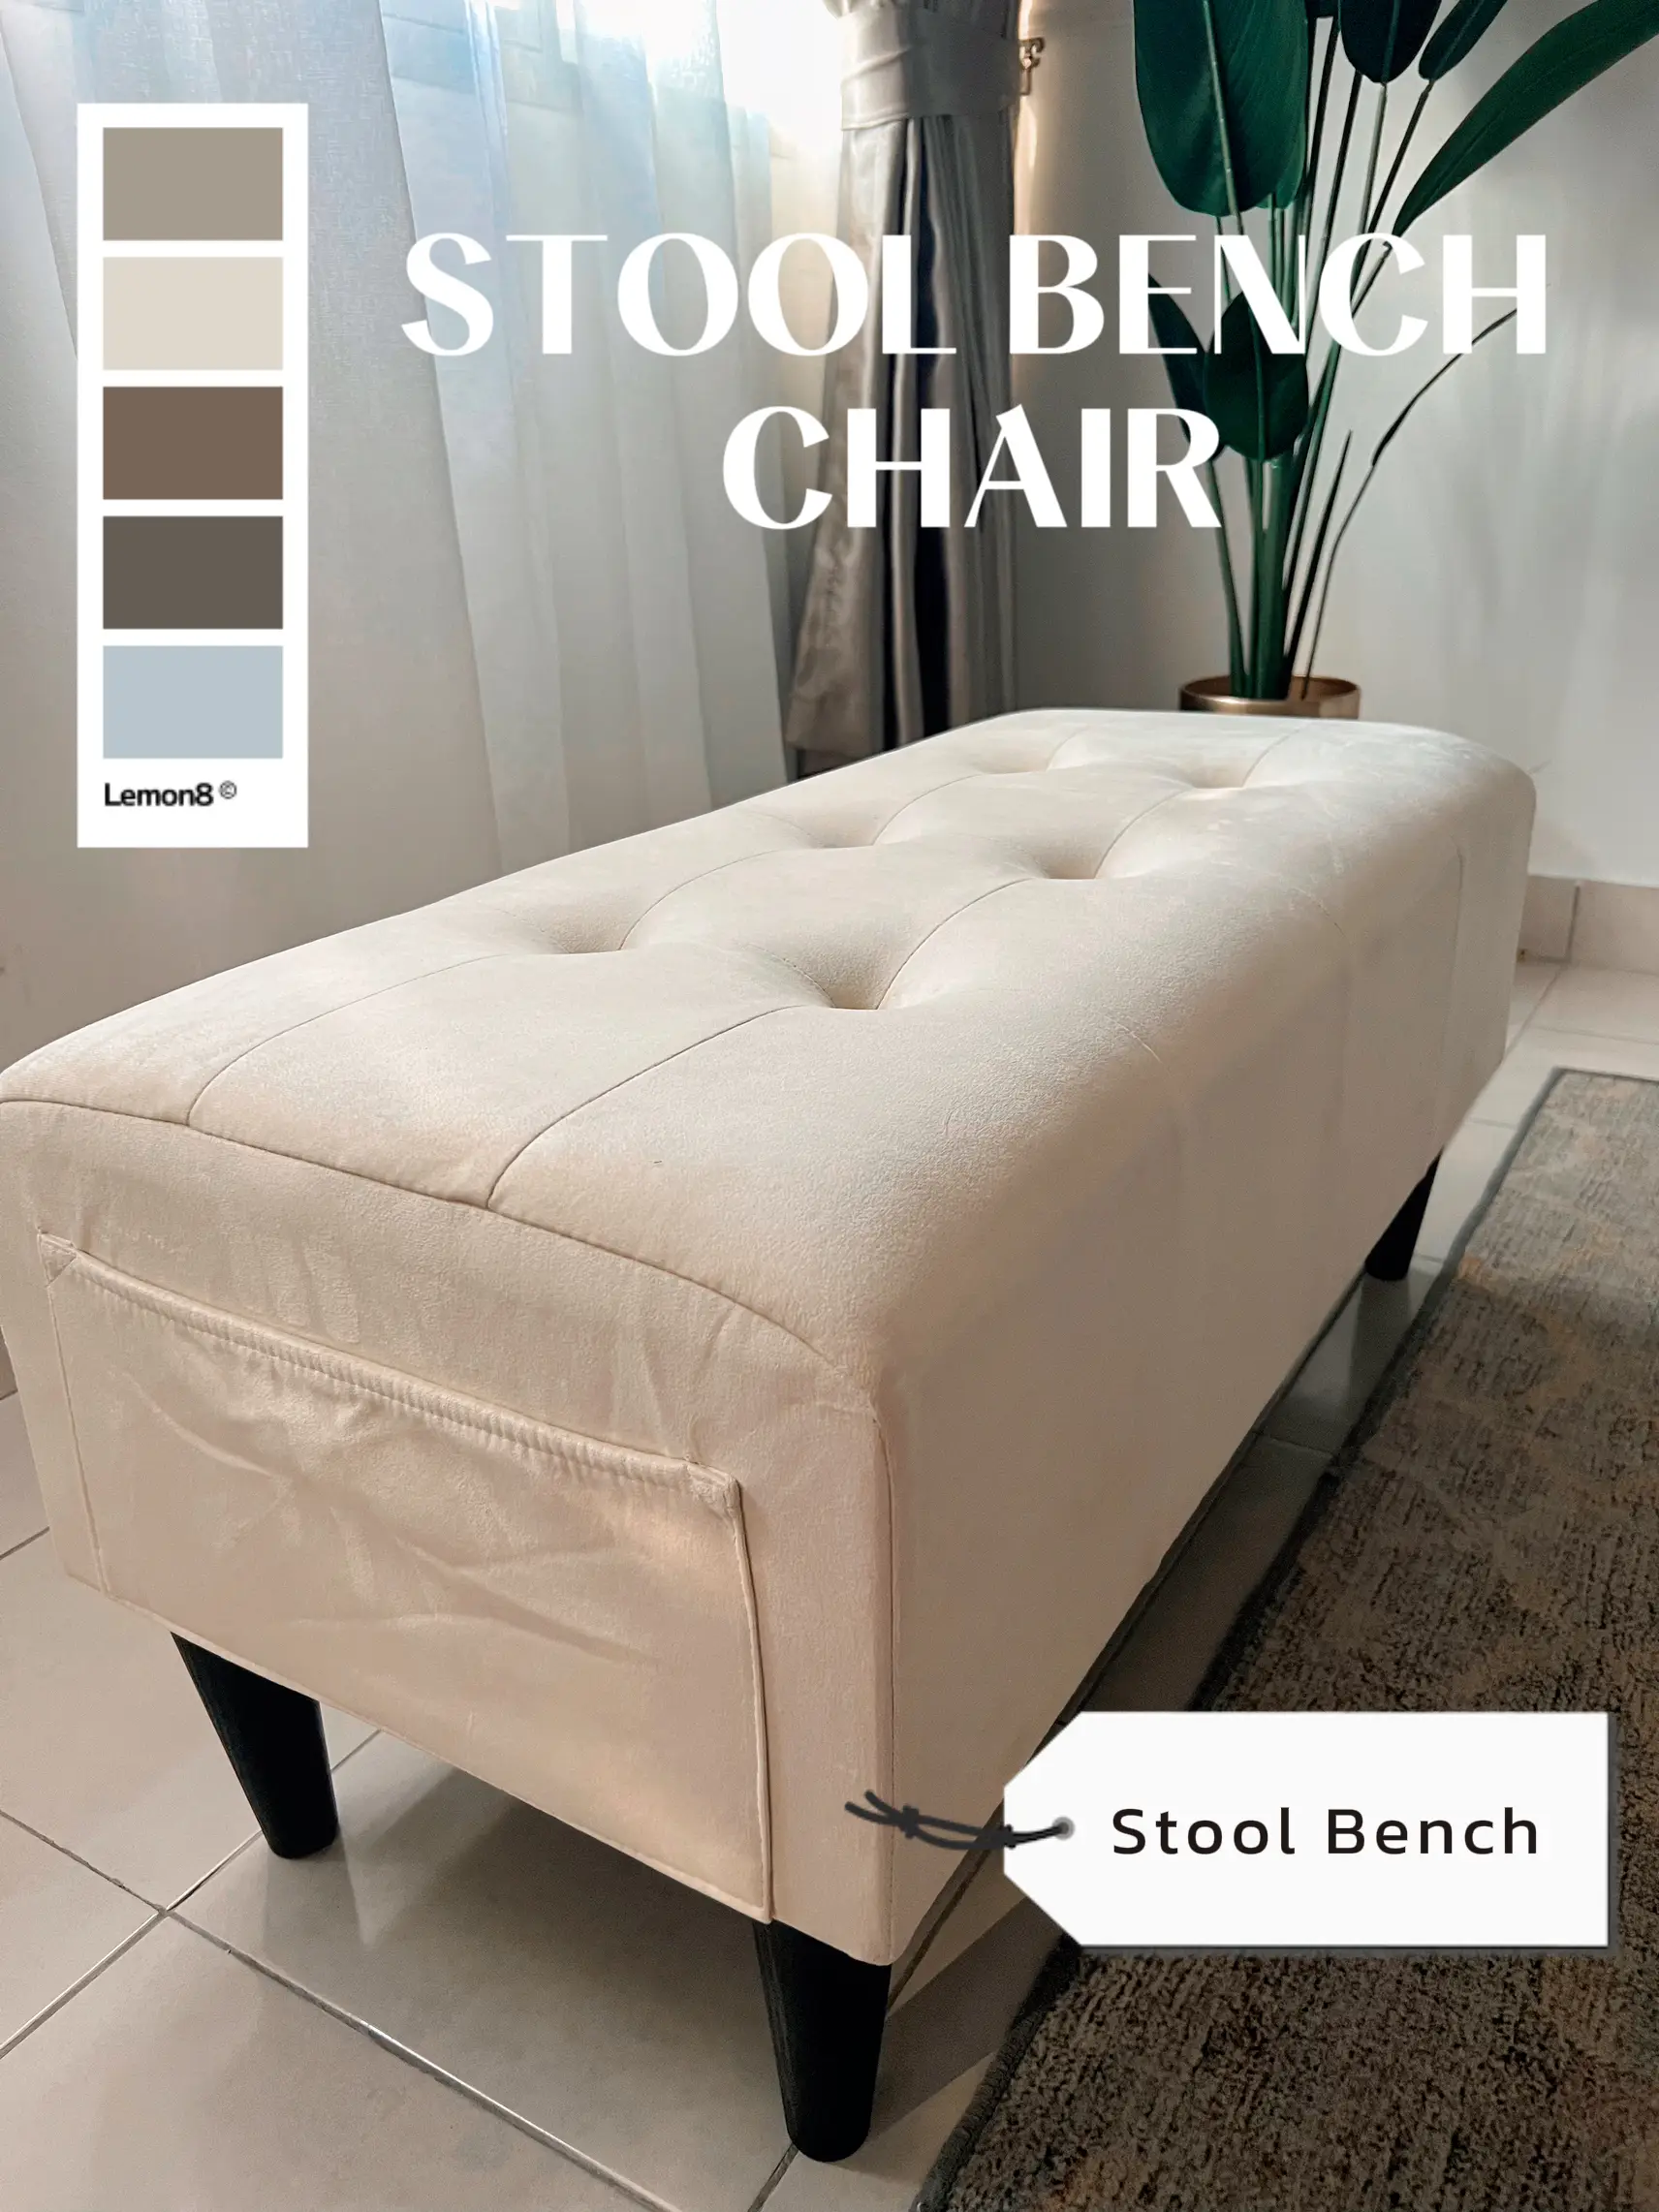 Stool Bench Chair Murah Beli Mana Gallery Posted By Aira Lemon8